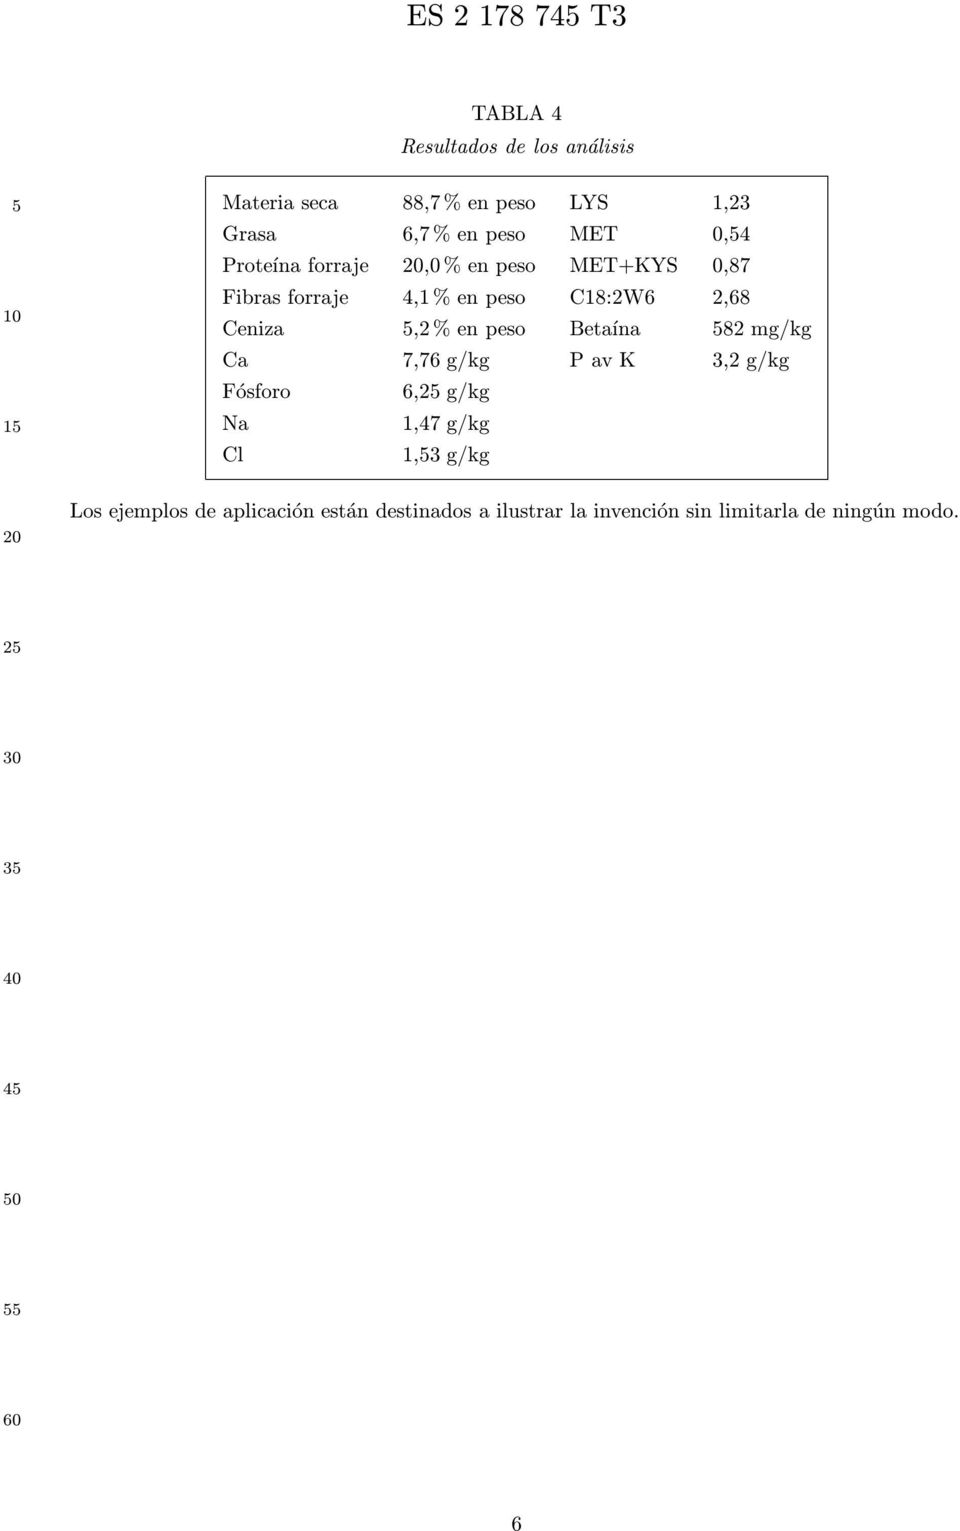 Ceniza,2 % en peso Betaína 82 mg/kg Ca 7,76 g/kg P av K 3,2 g/kg Fósforo 6,2 g/kg Na 1,47 g/kg Cl 1,3